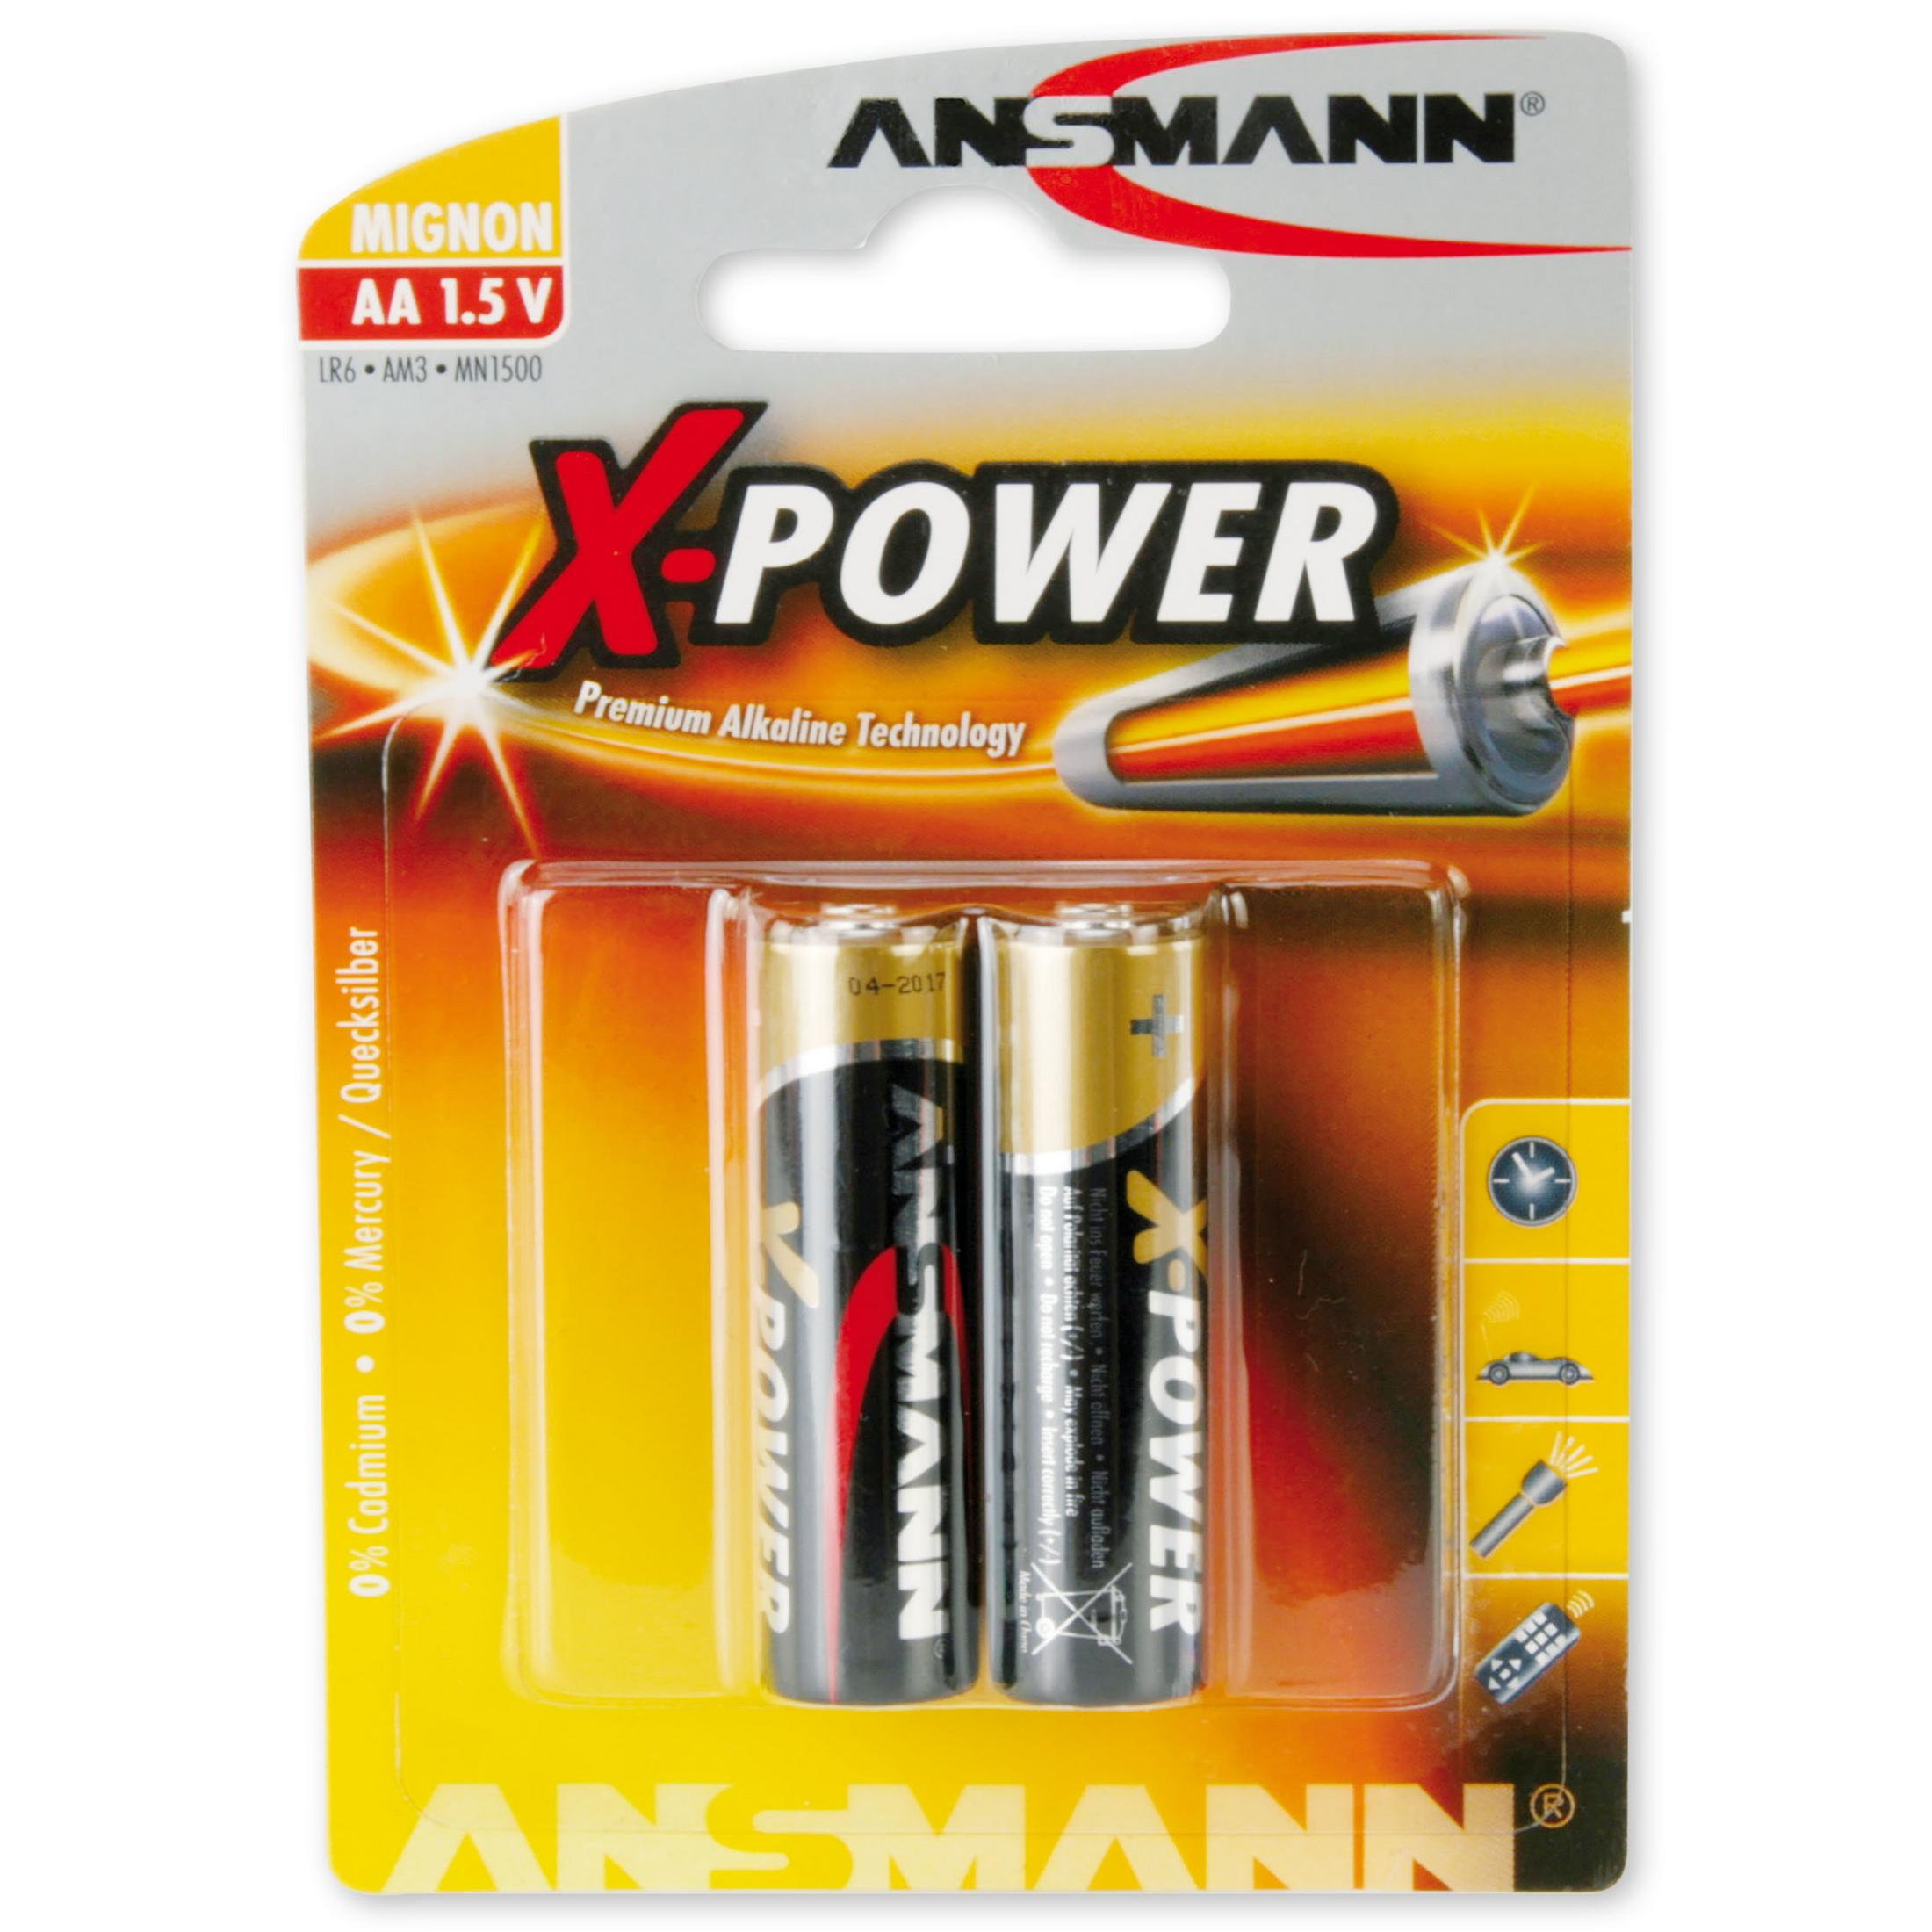 ANSMANN ANSMANN 5015613 Alkaline Batterie 1.5 Mignon Batterien Volt Alkaline, Energie Strom 2er-Pack / Batterien, 2 AA, Stück